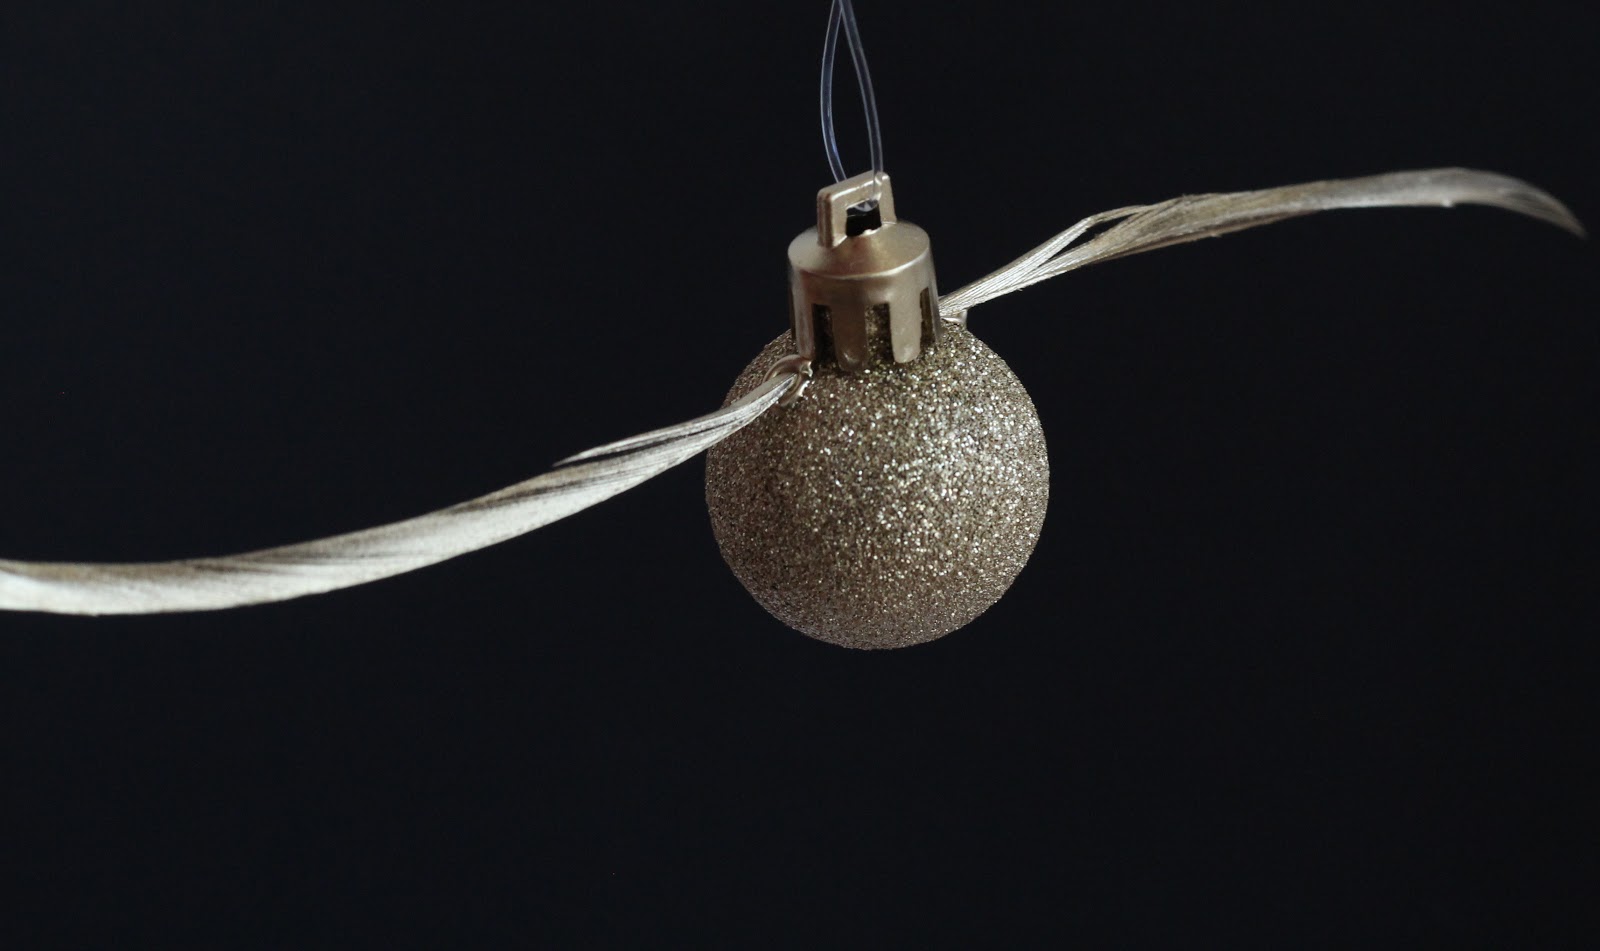 Harry Potter Golden Snitch Ornament - Savings Lifestyle